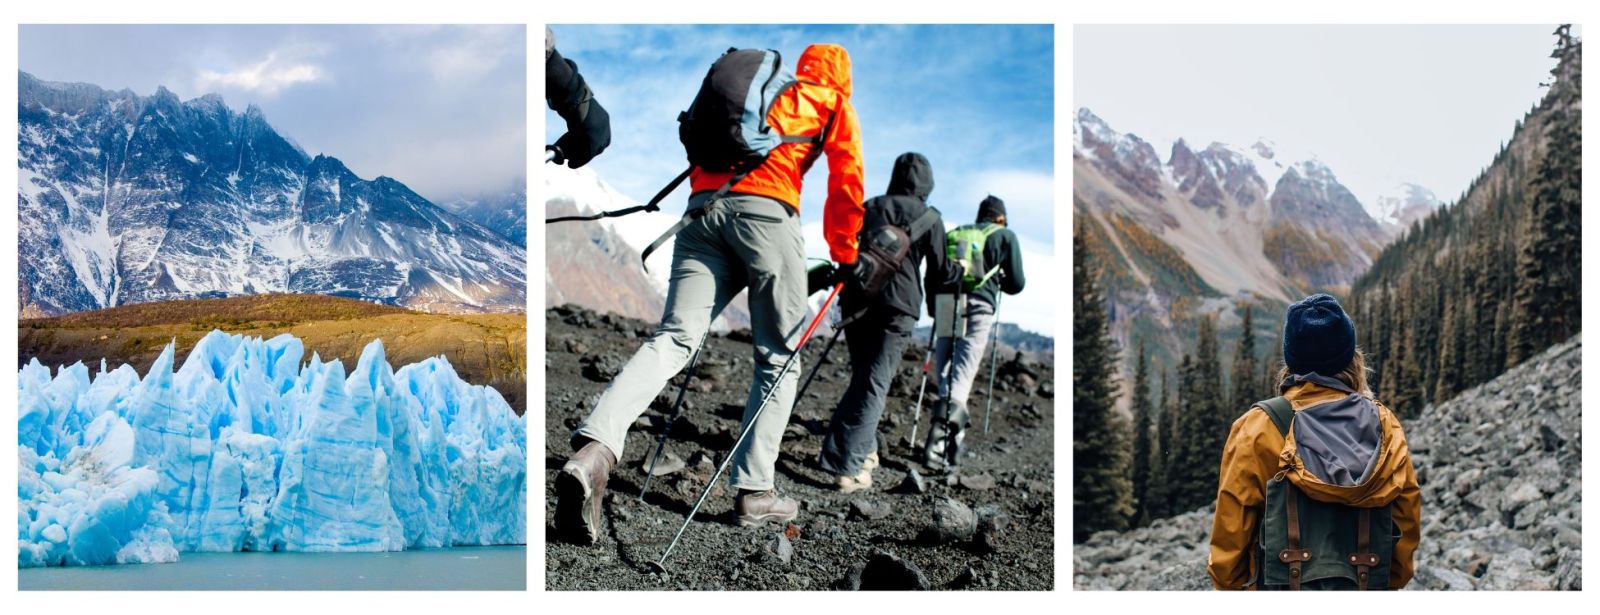 Trekking Holidays, Hiking Holidays,ATOL protected,Guides, Independent Treks